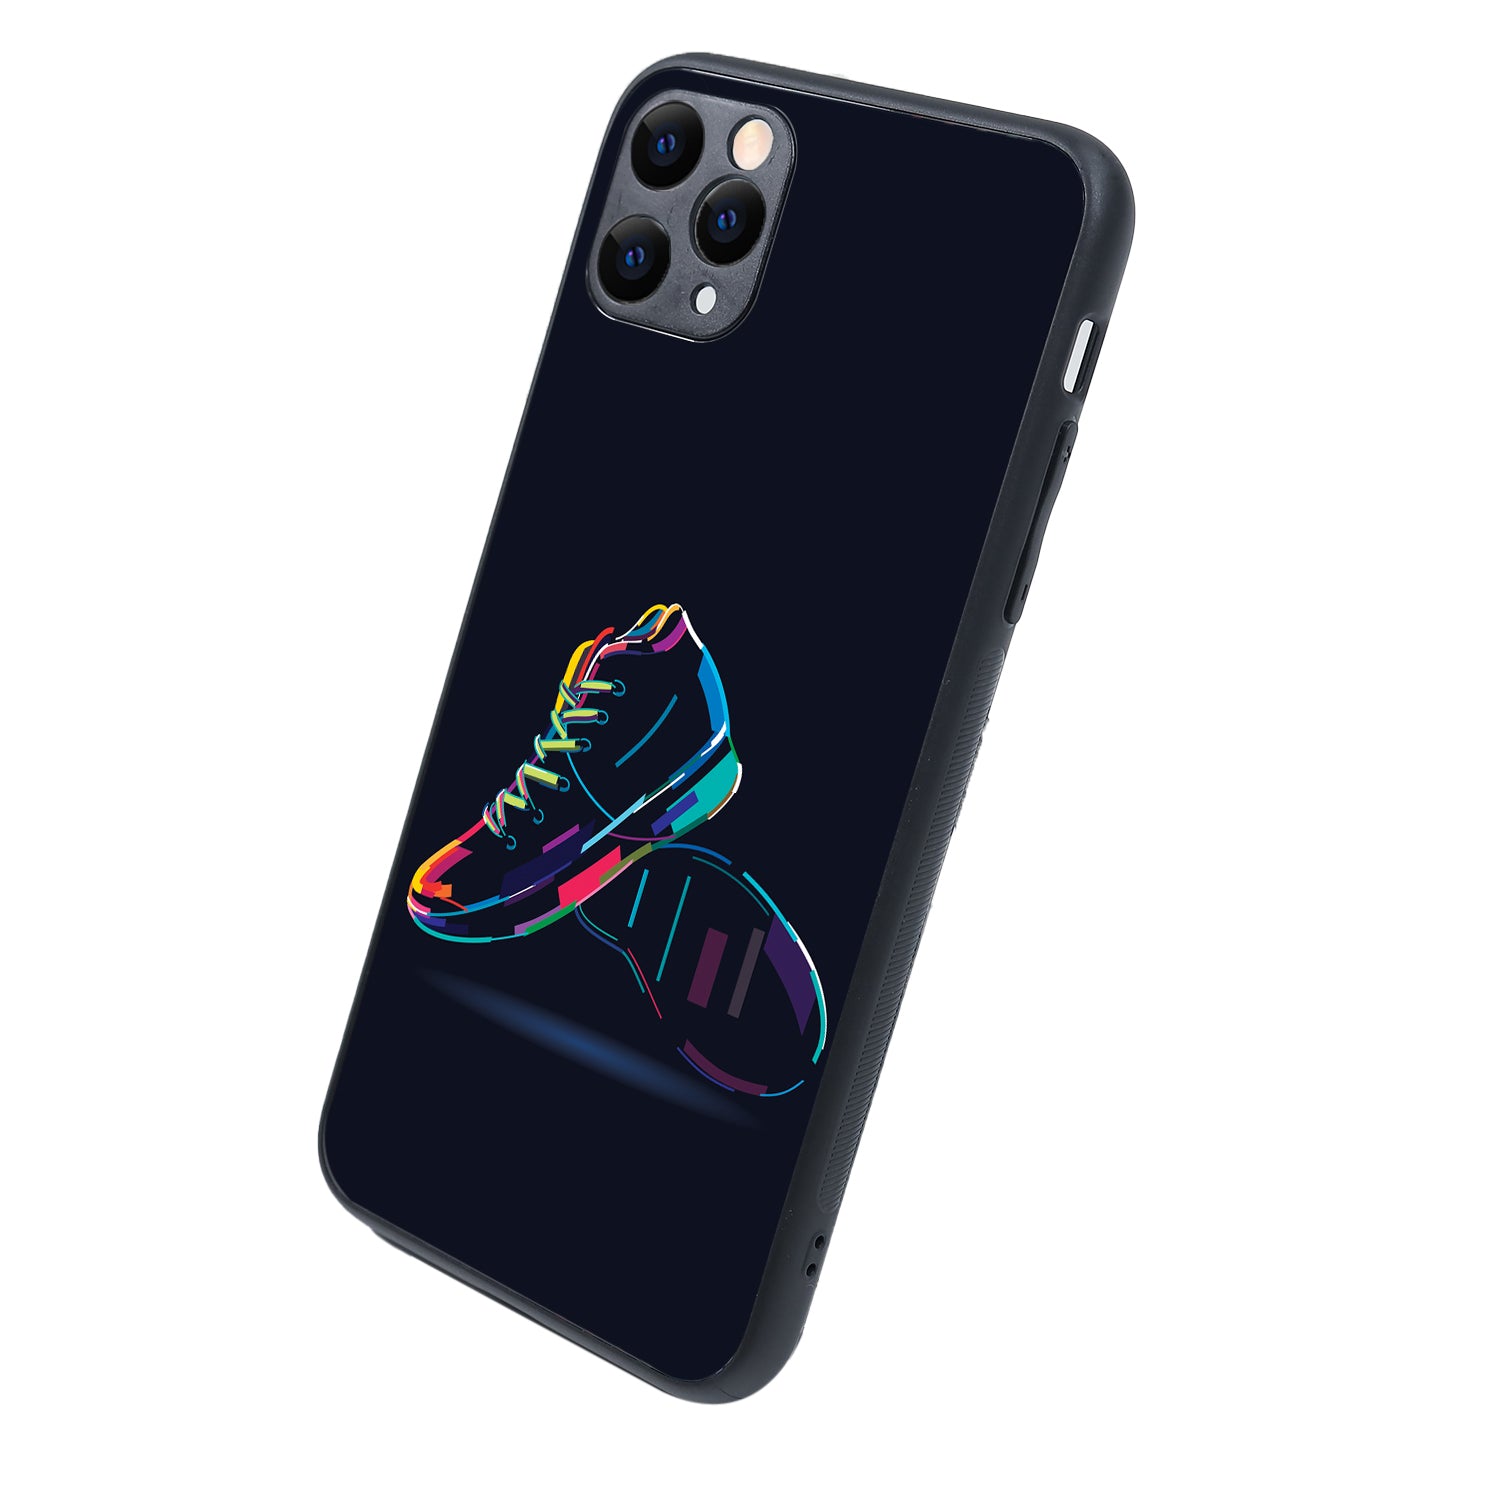 Shoe Motivational Quotes iPhone 11 Pro Max Case